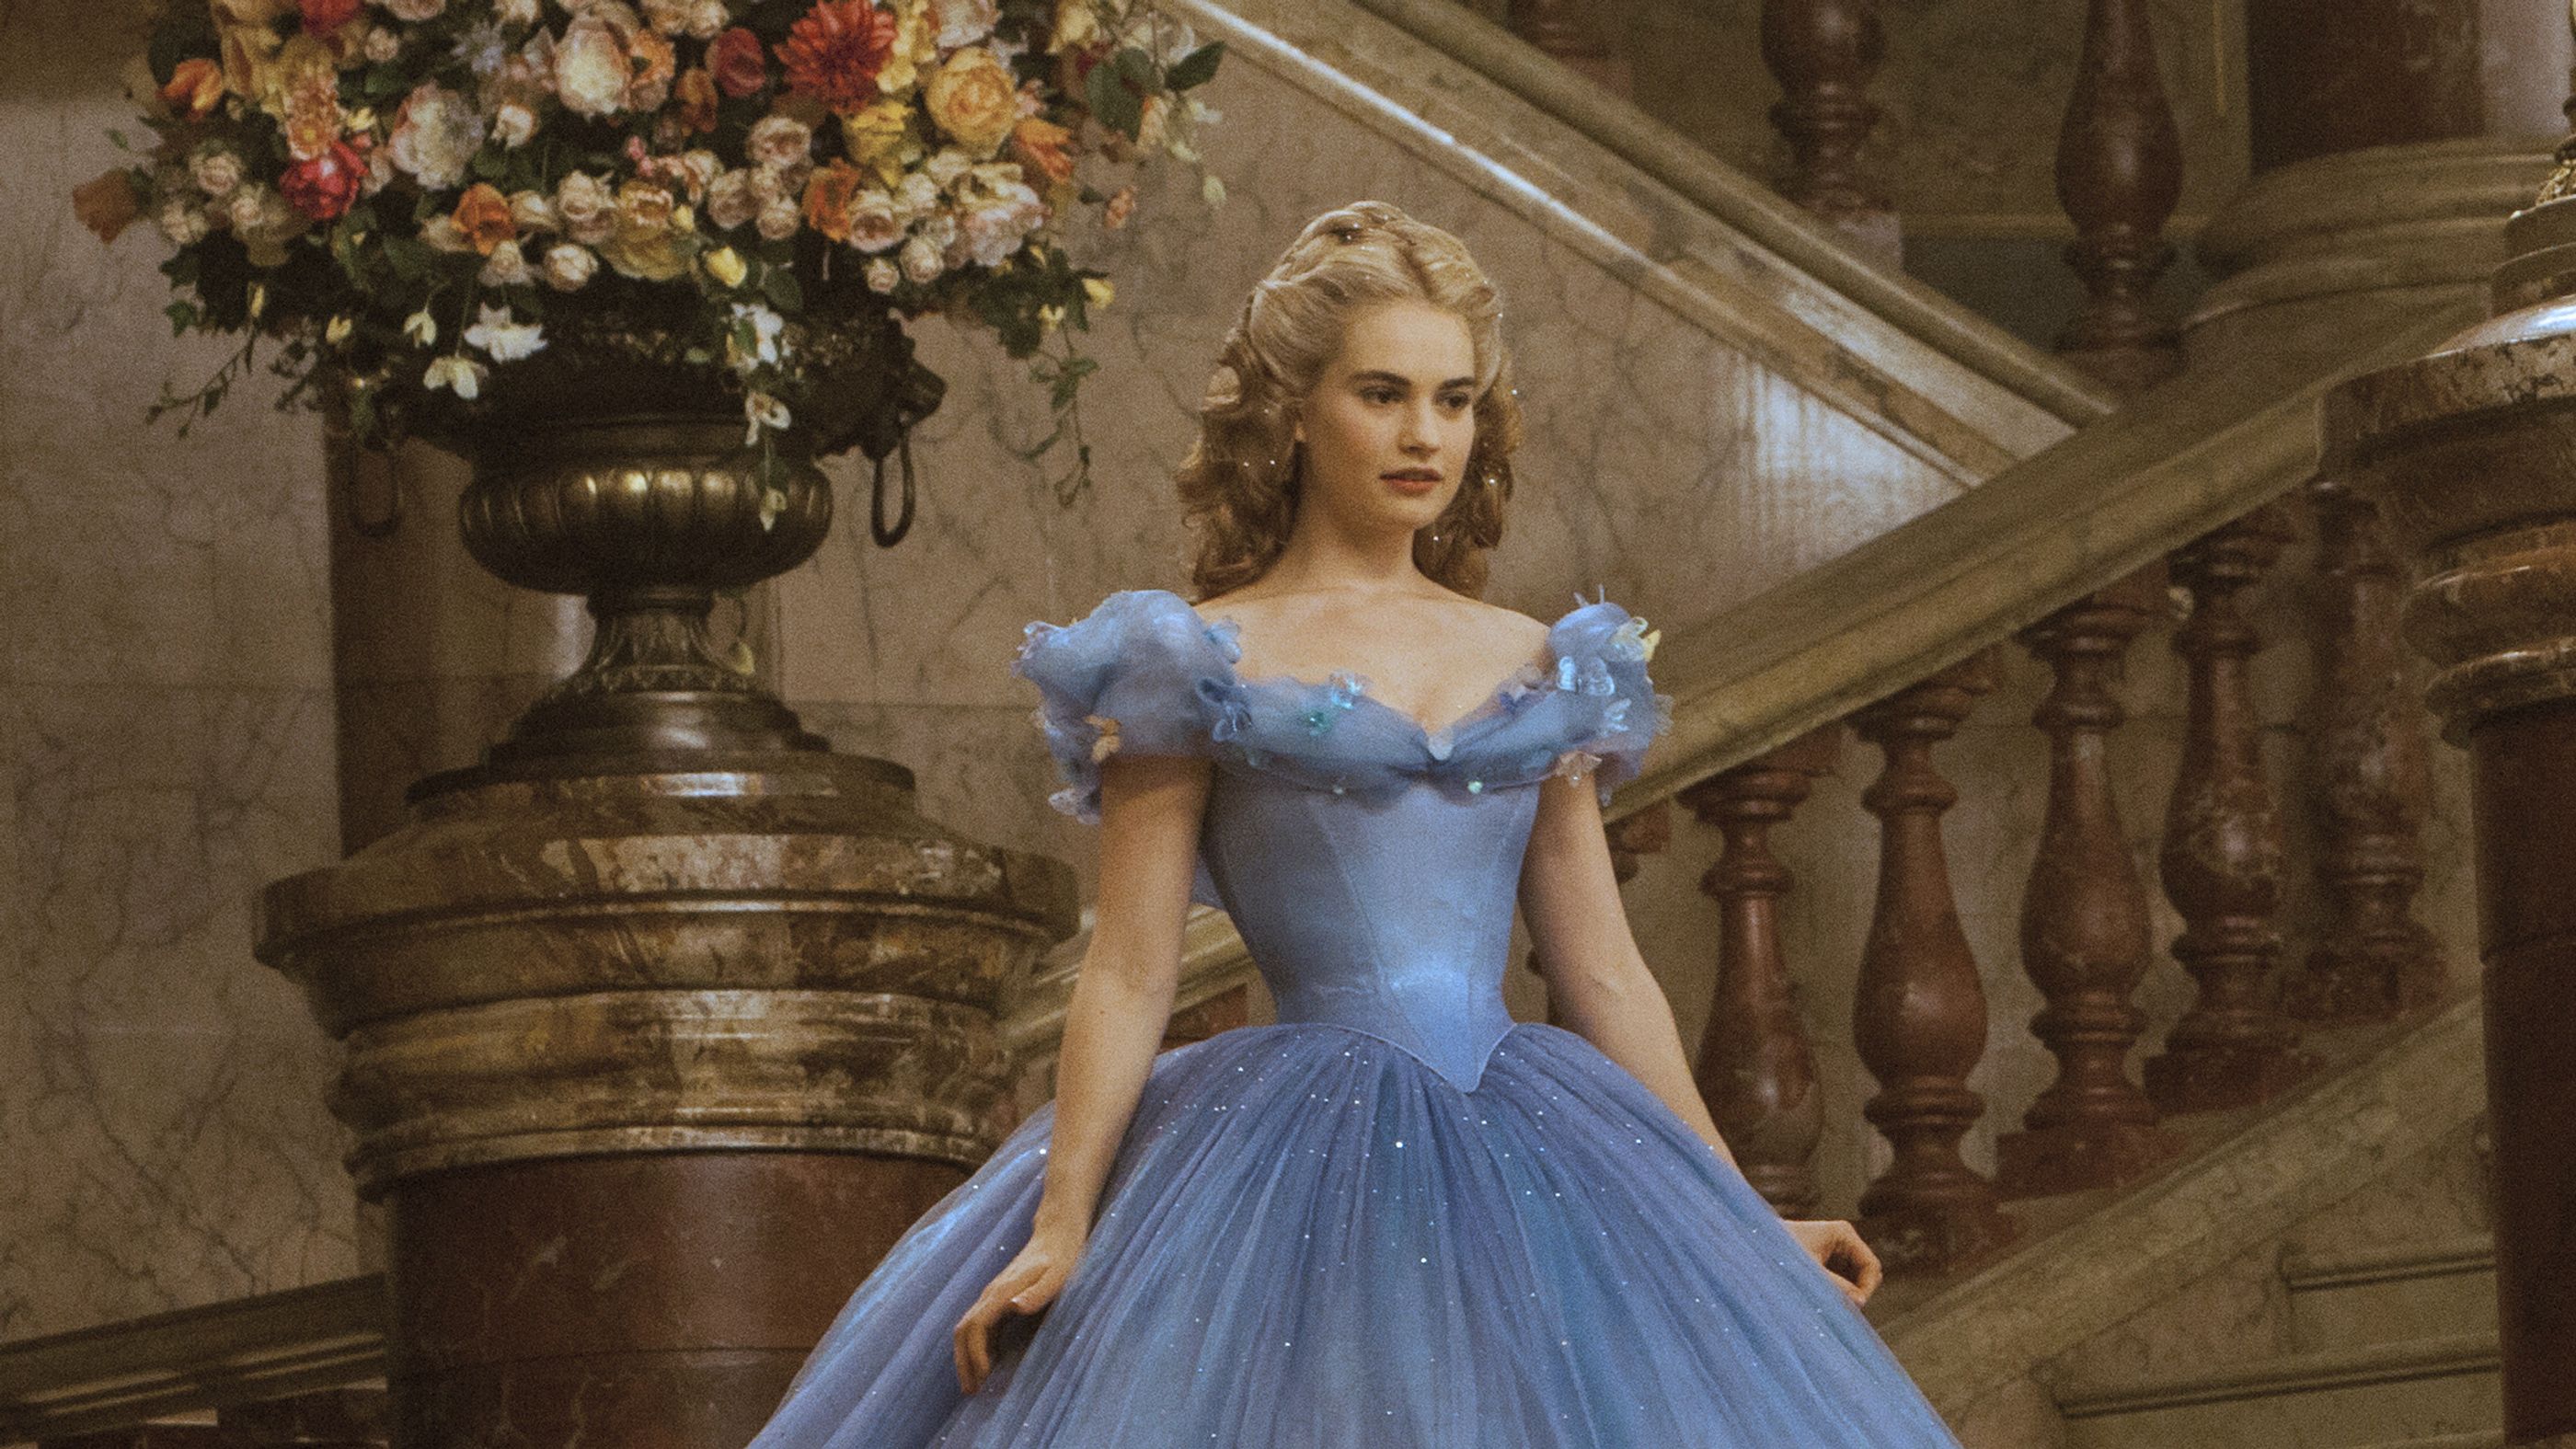 Cinderella (2015 American film) - Wikipedia